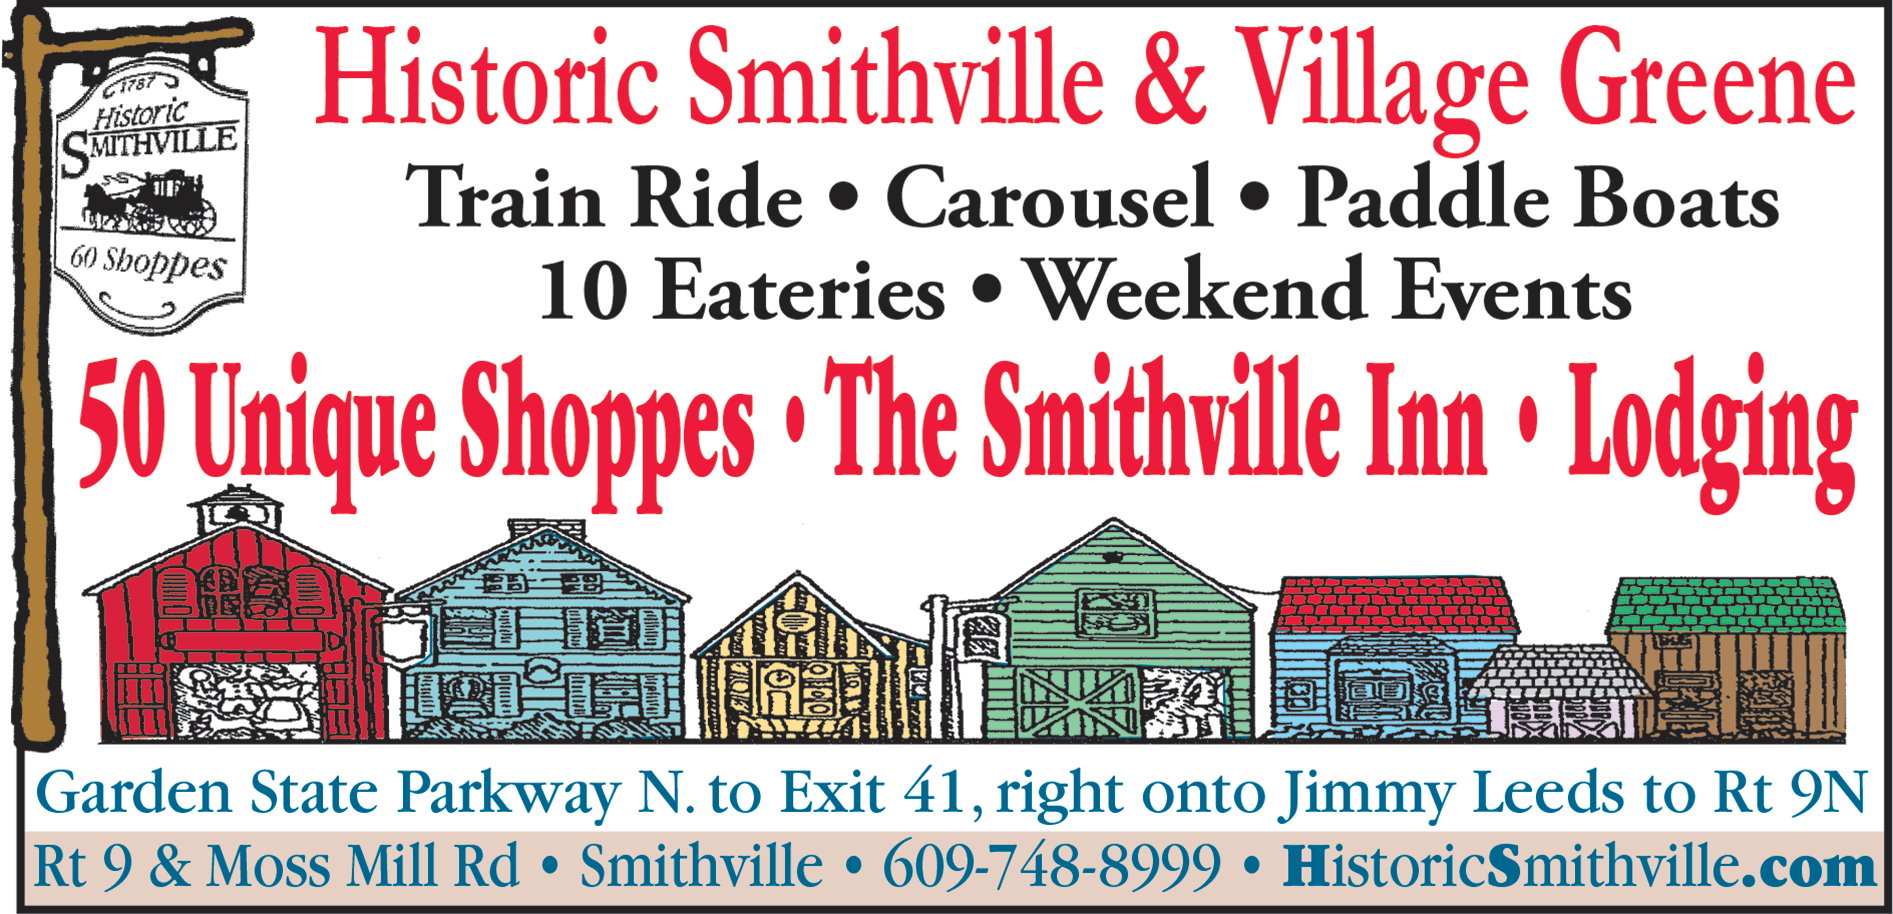 Village Greene Shoppes & Historic Smithville Print Ad